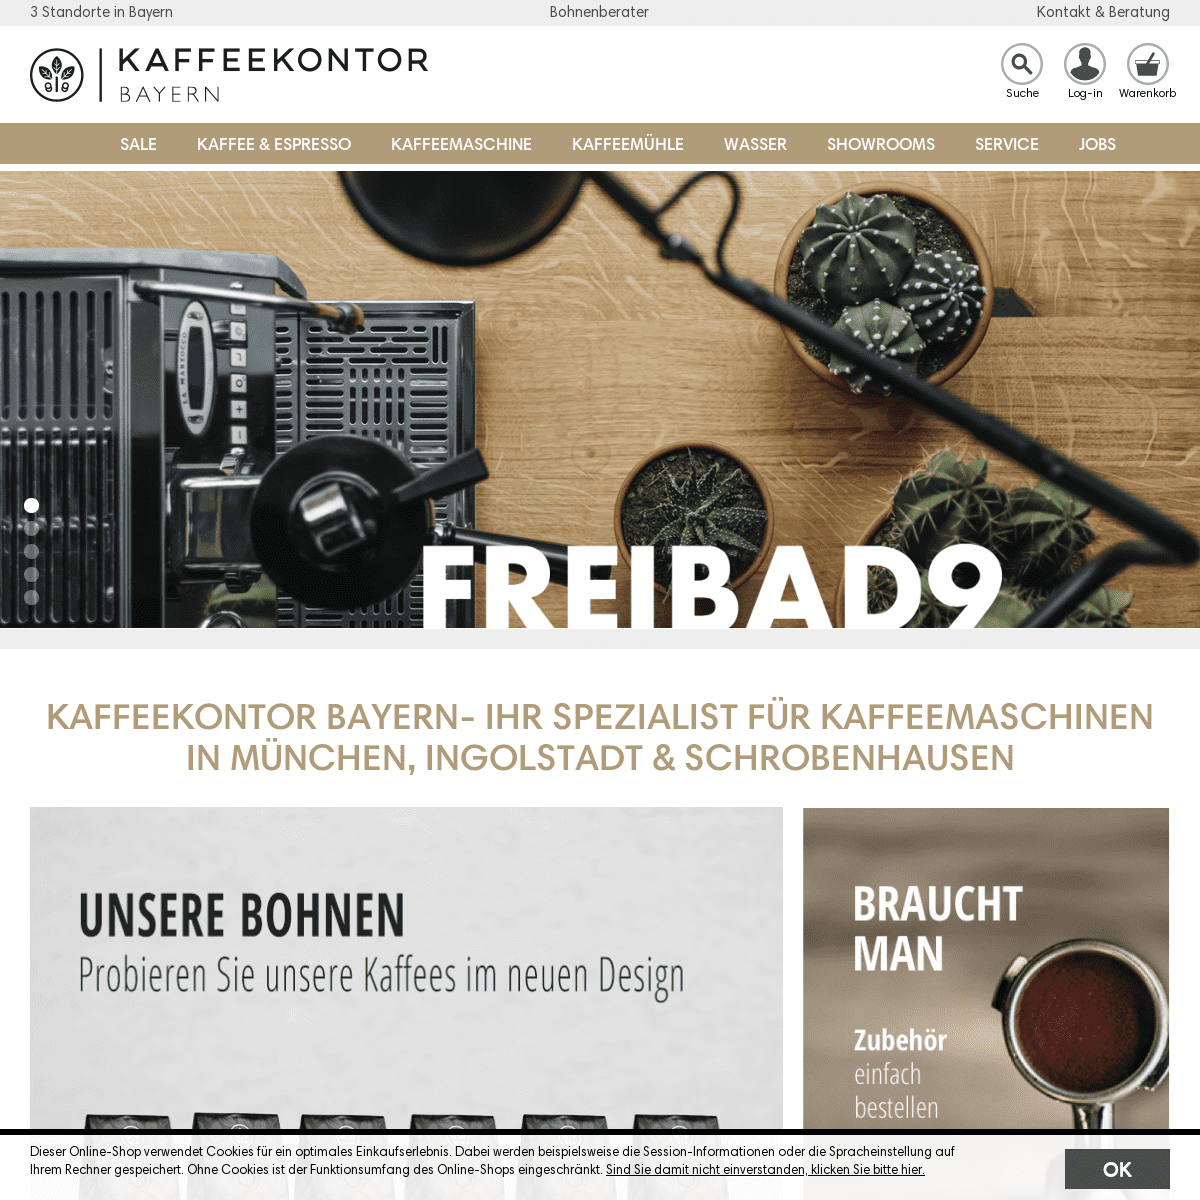 A complete backup of kaffeekontor.org